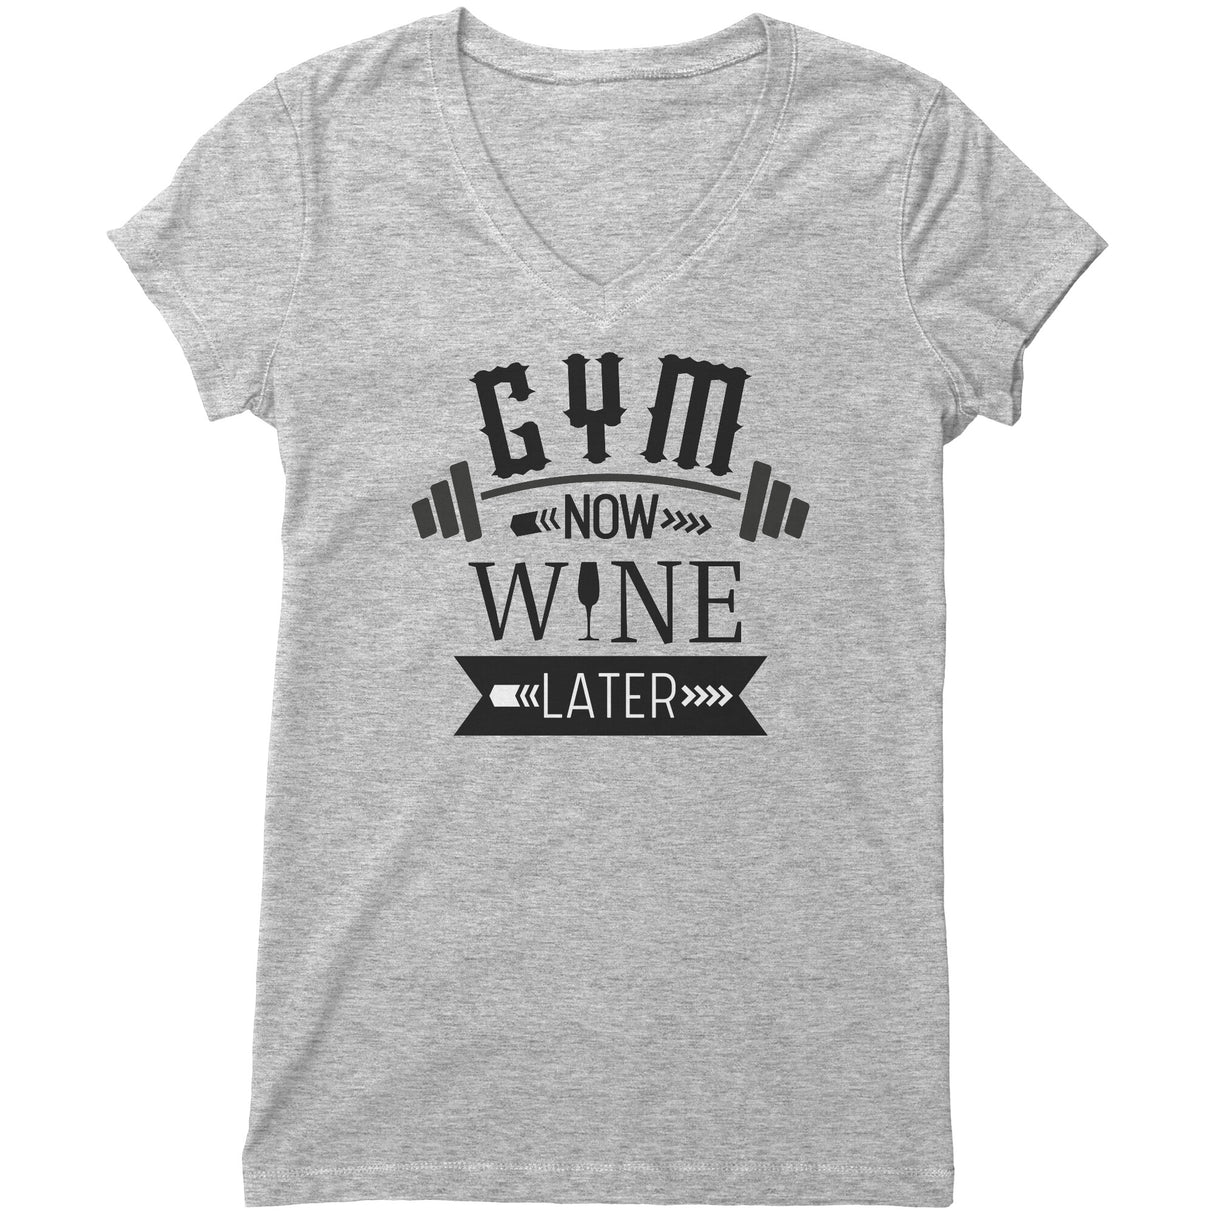 "Gym Now Wine Later" V-neck Shirt